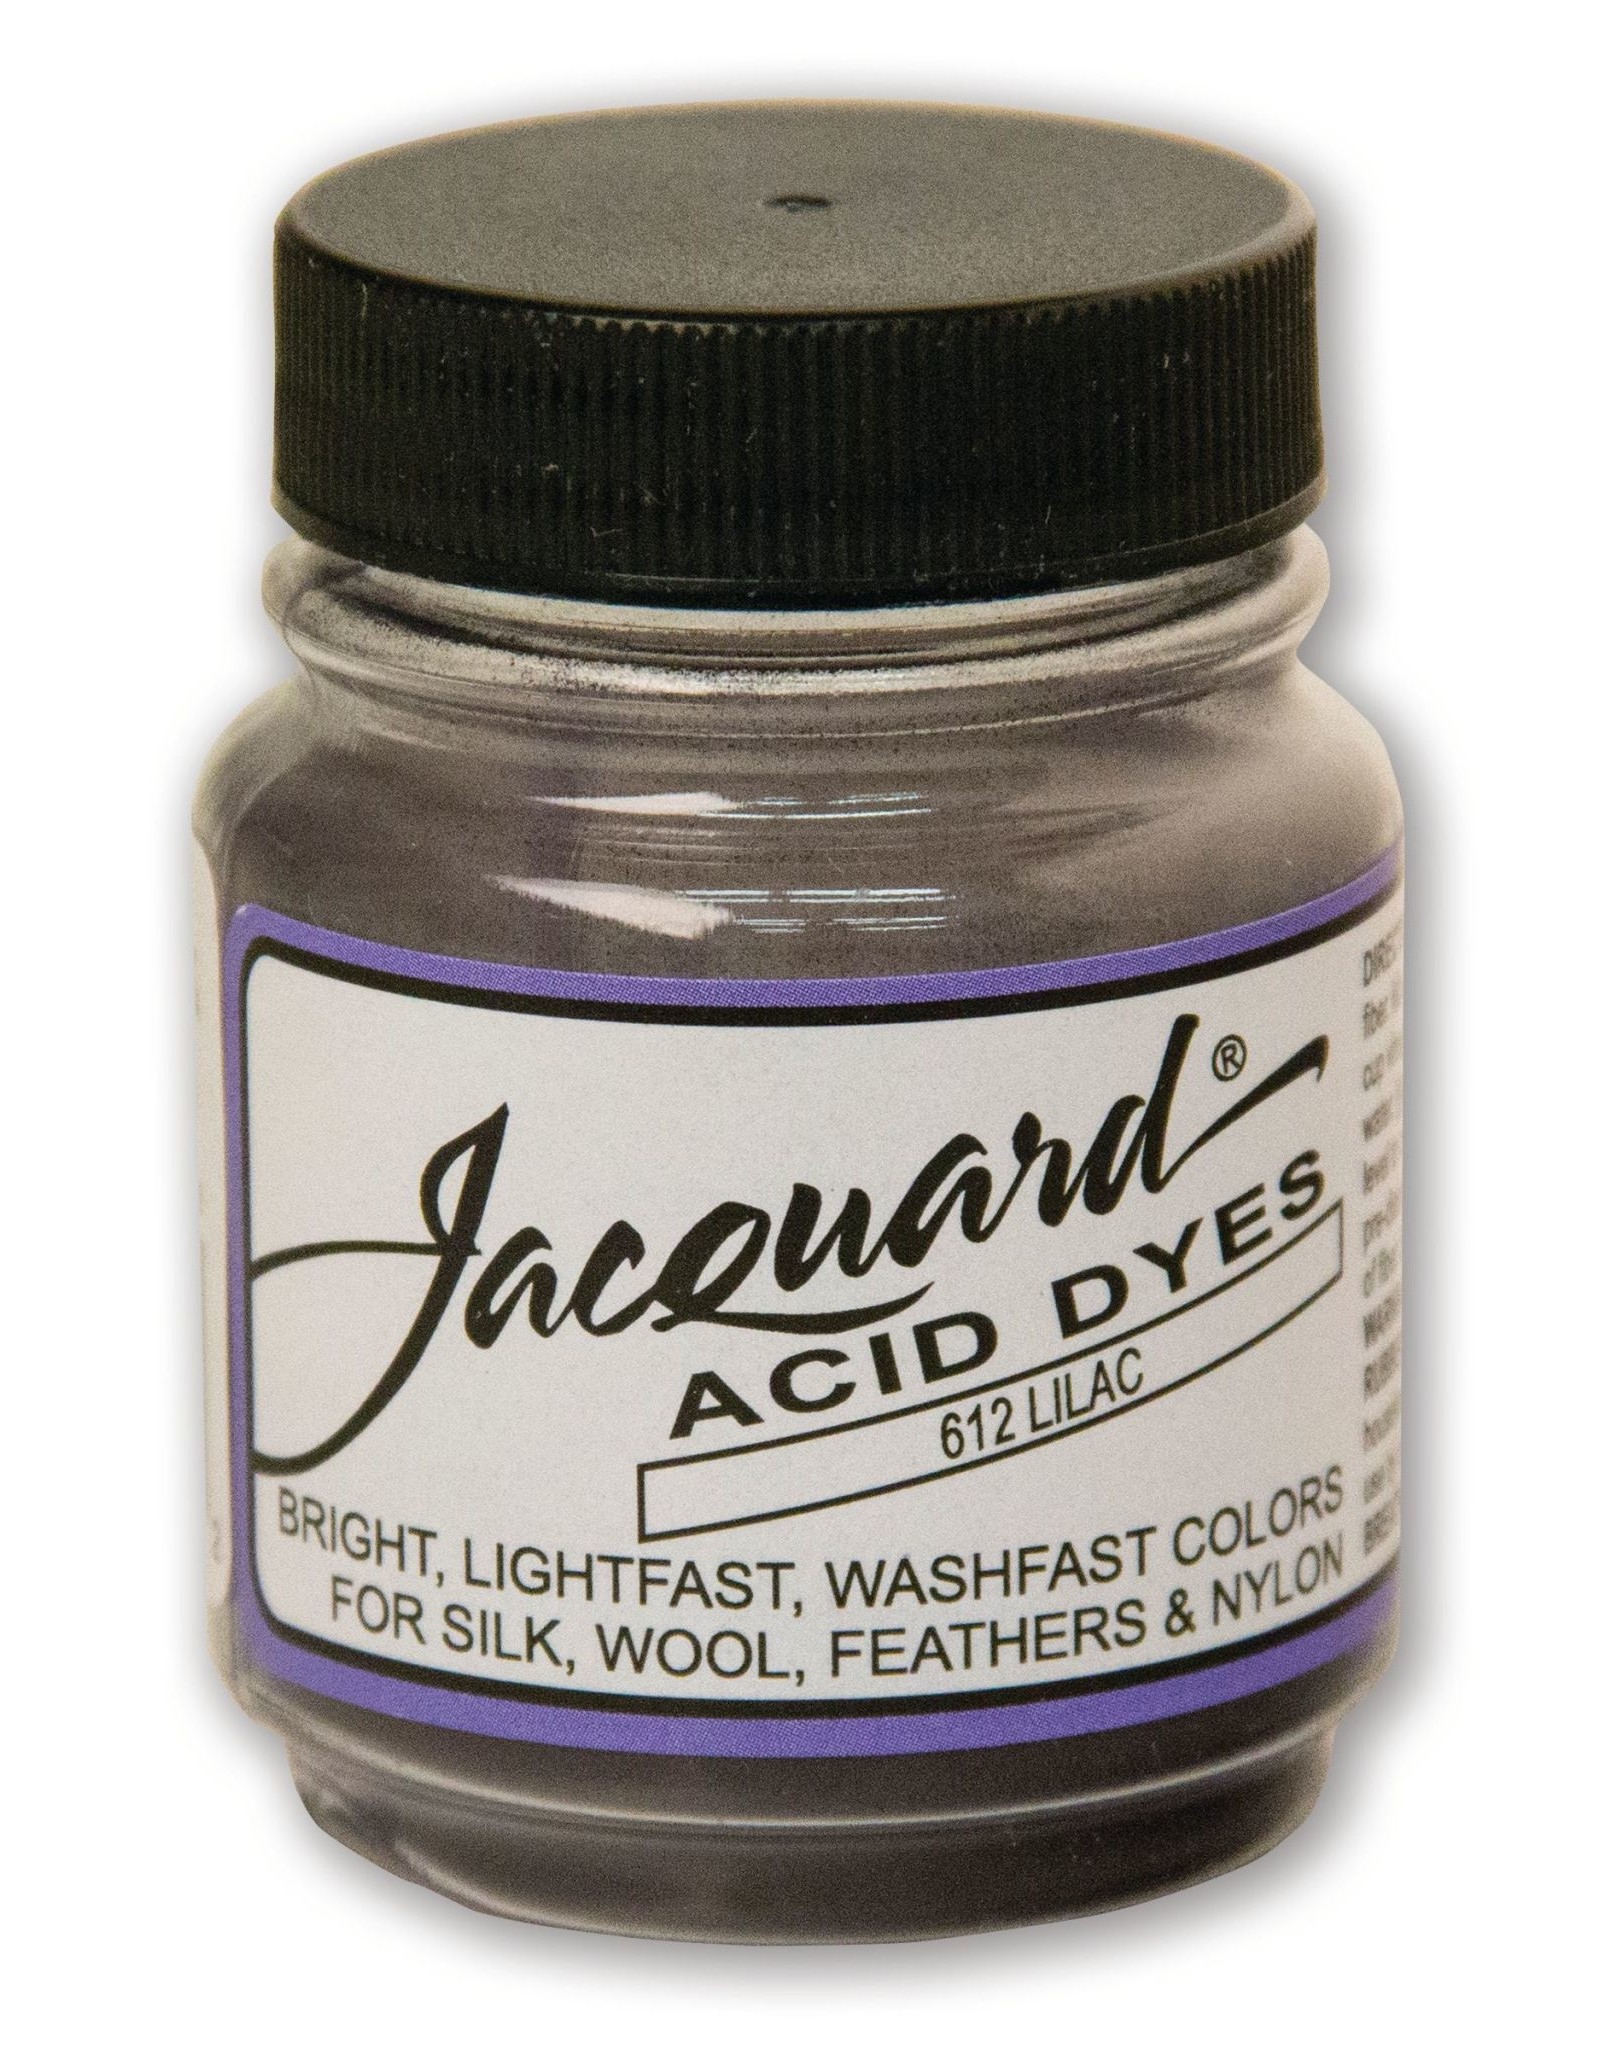 Jacquard Jacquard Acid Dye, #612 Lilac ½oz